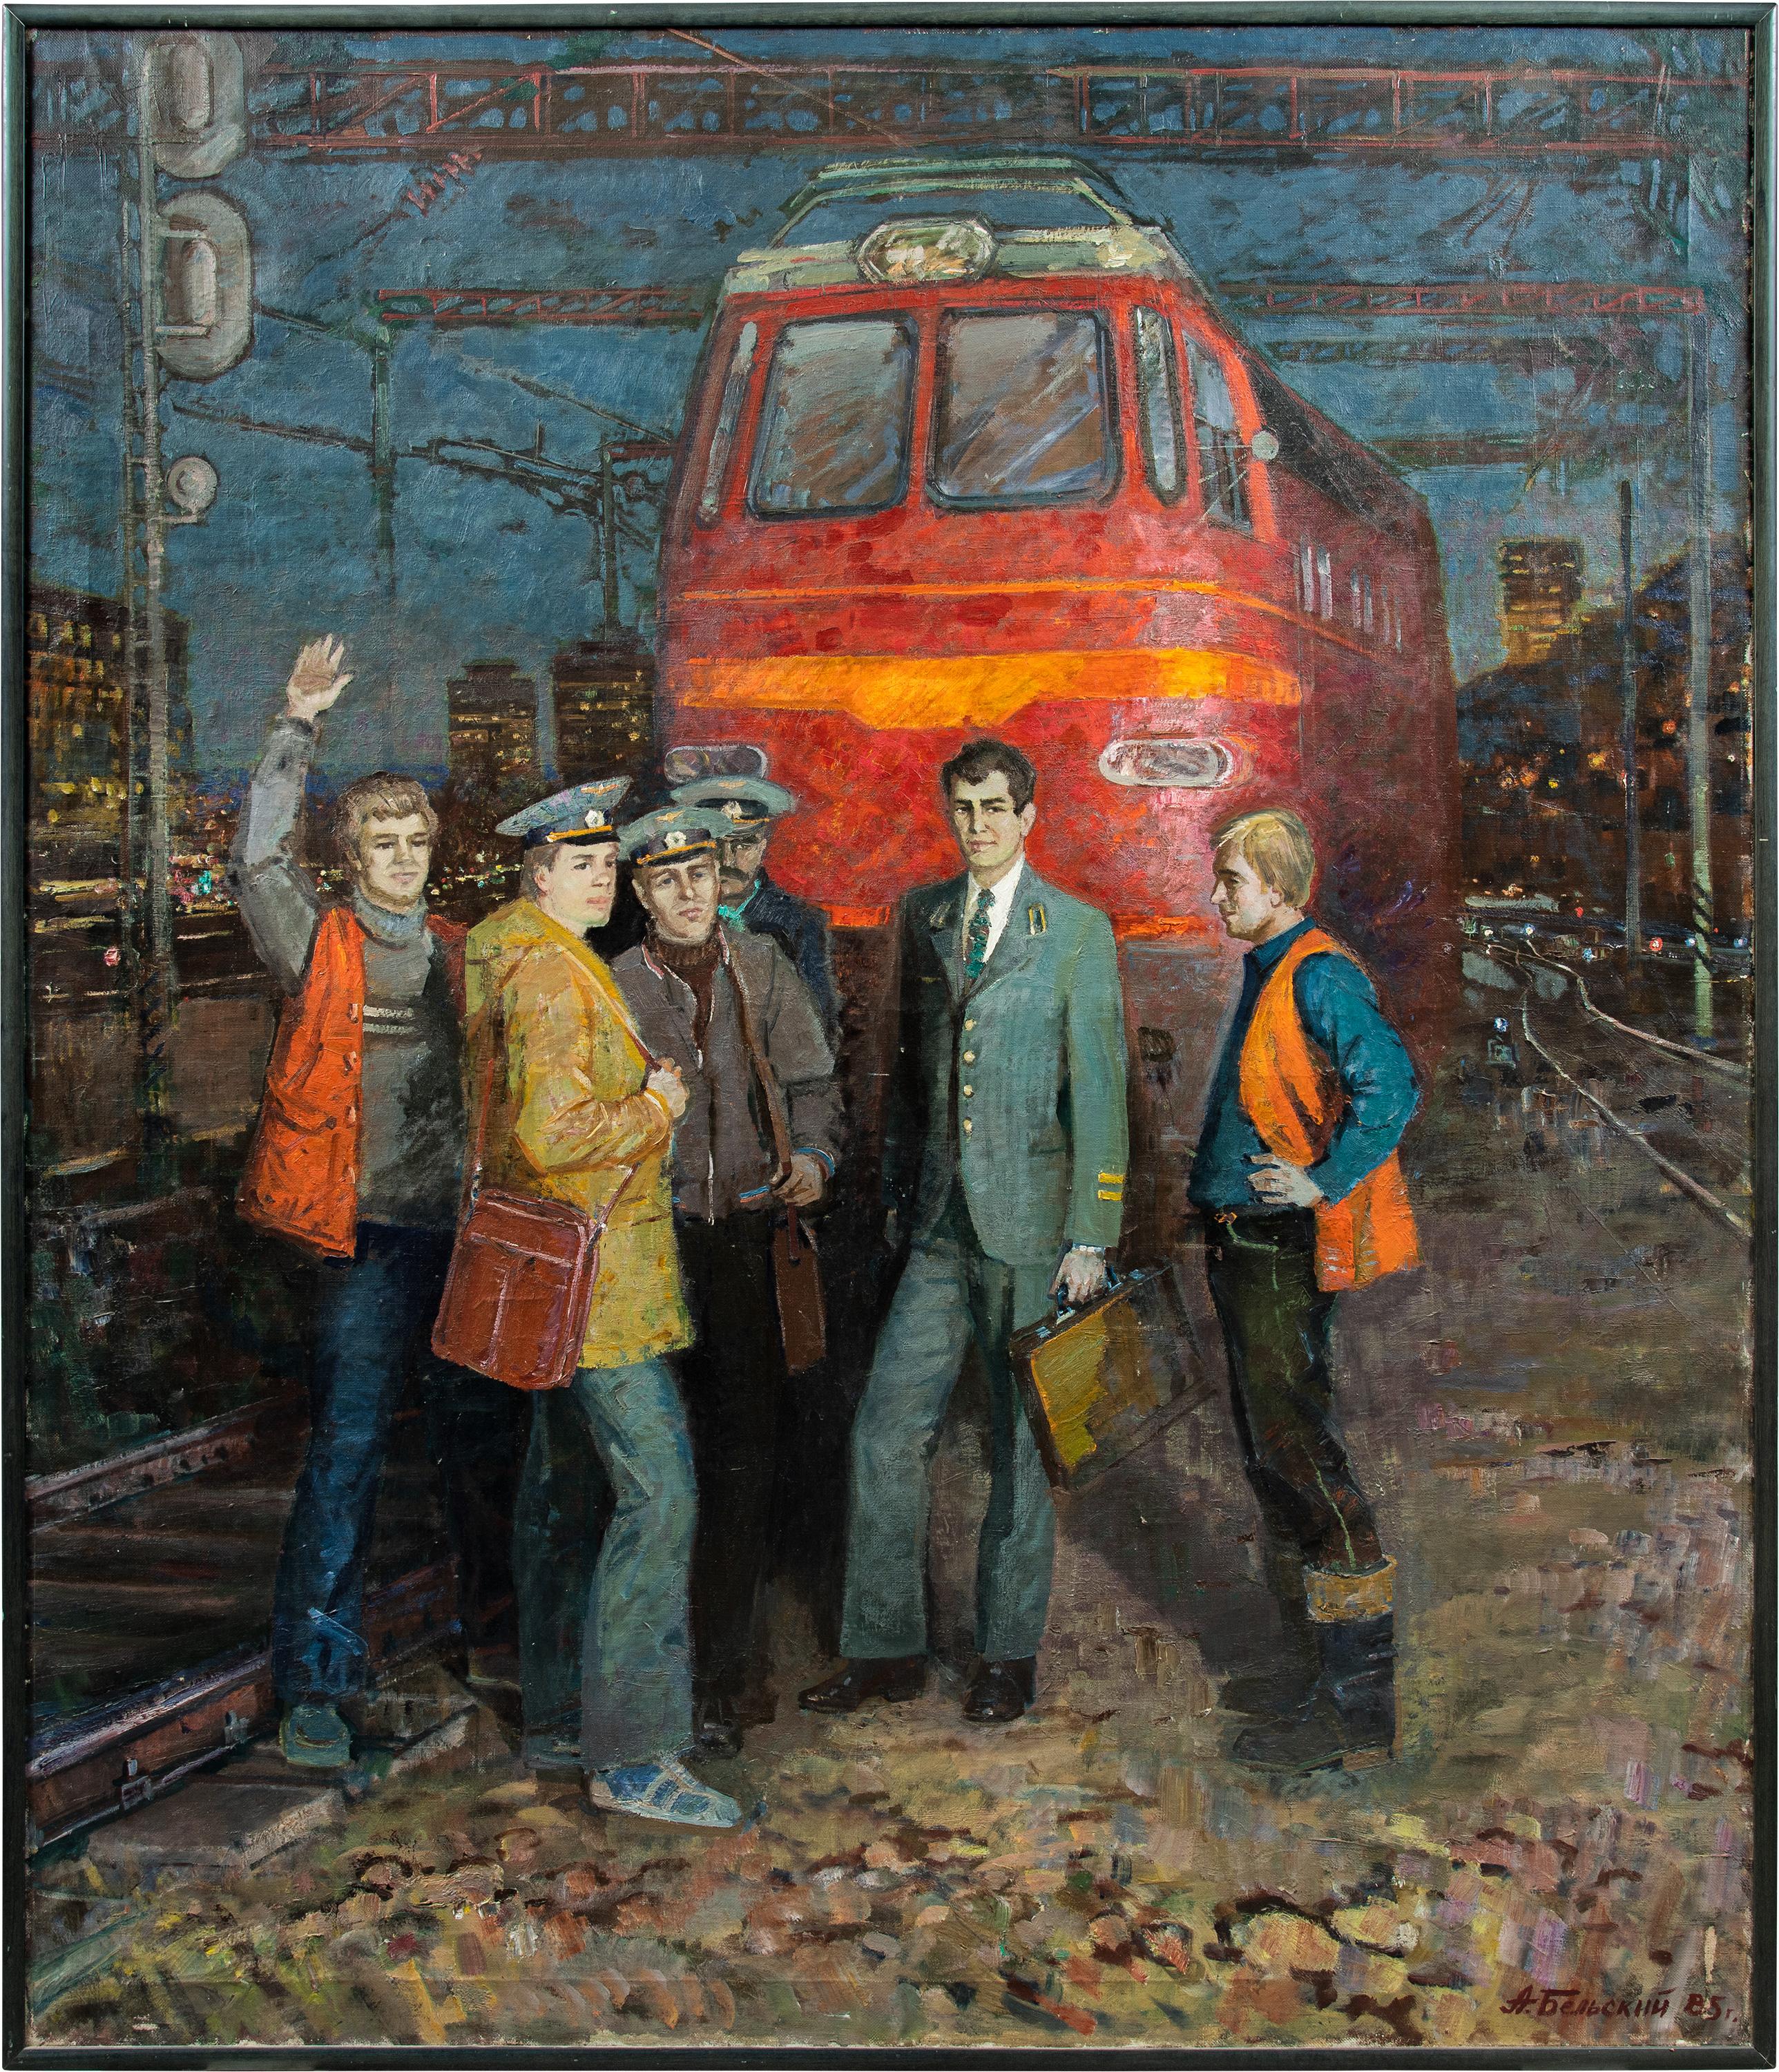 A. M. Belsky (Ukrainian Realist painter) - 20th century Soviet figure painting